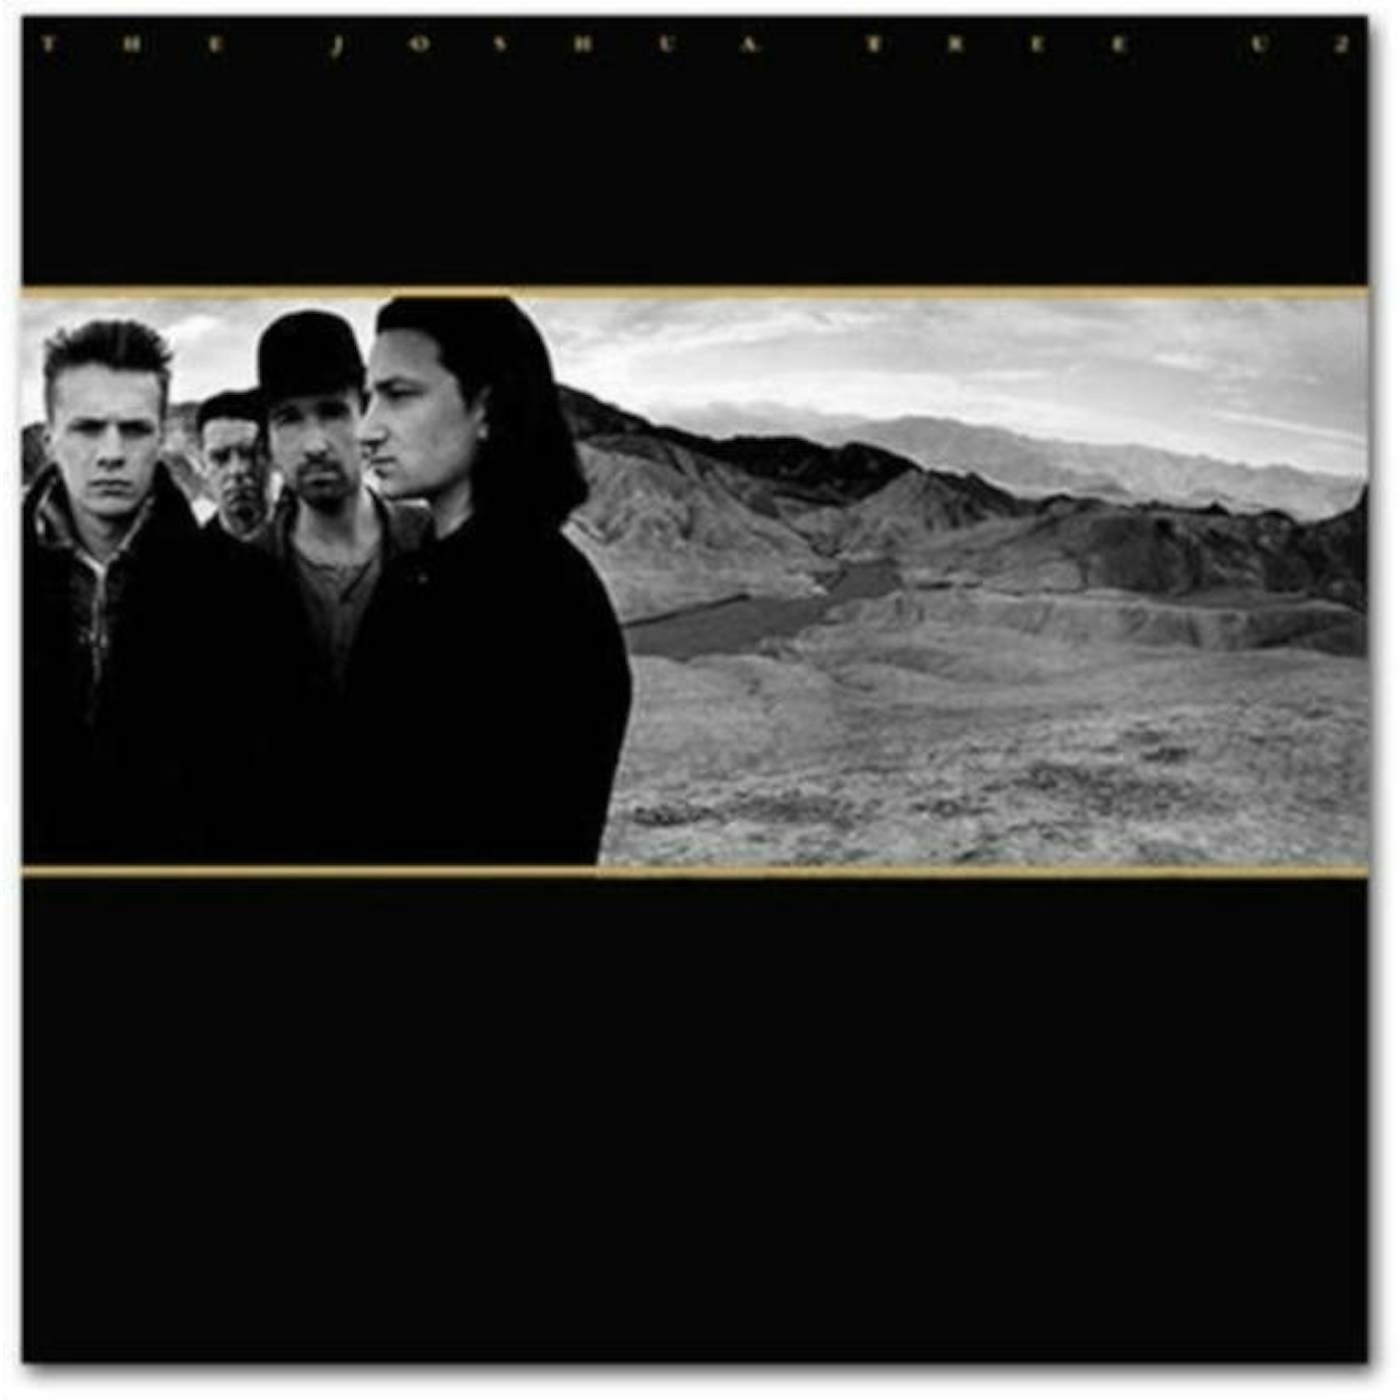 U2 LP Vinyl Record - The Joshua Tree